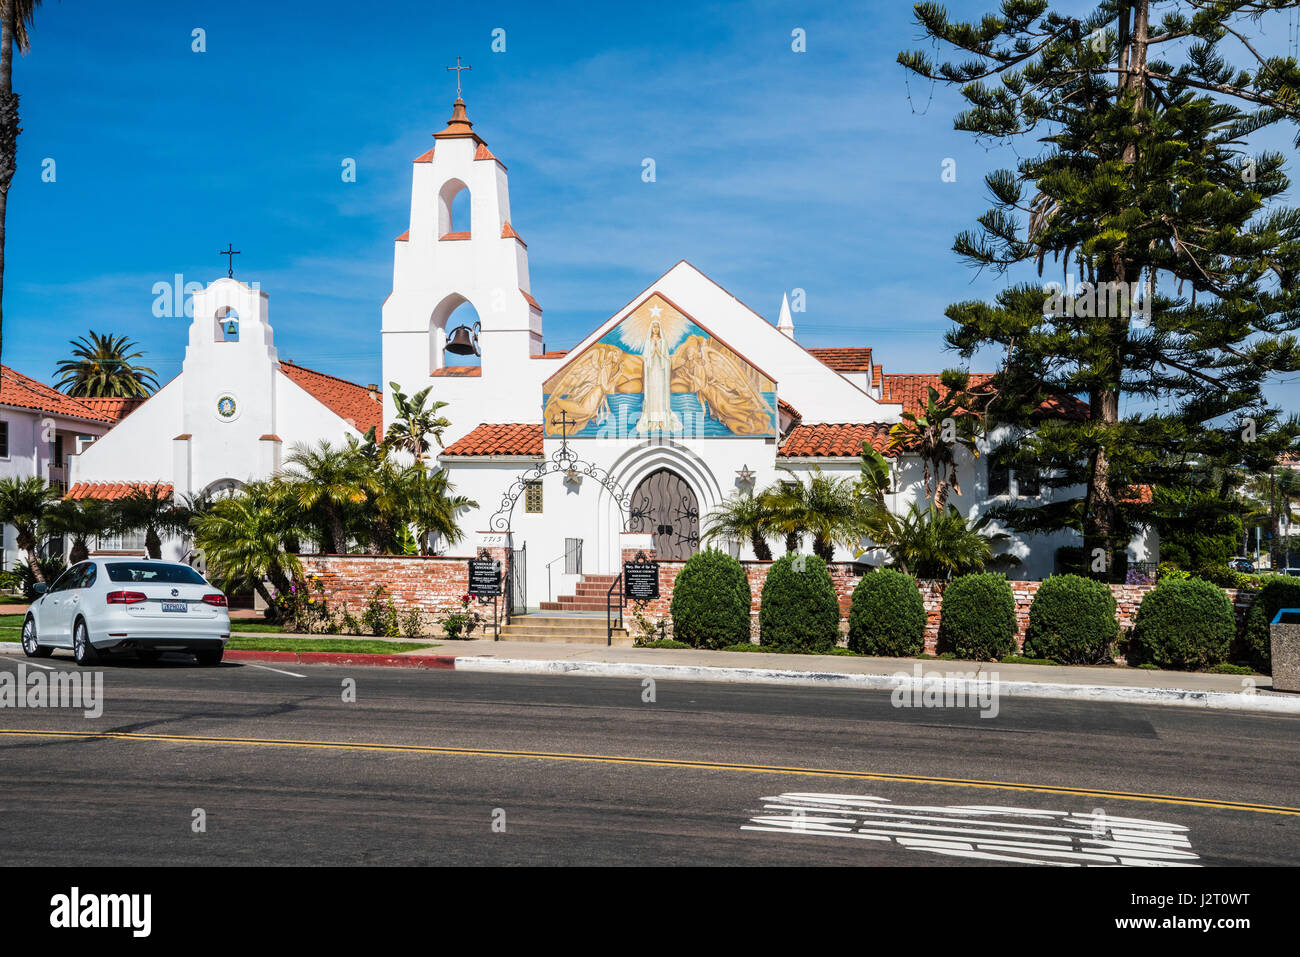 Maria Stern des Meeres katholische Kirche in La Jolla, Kalifornien Stockfoto